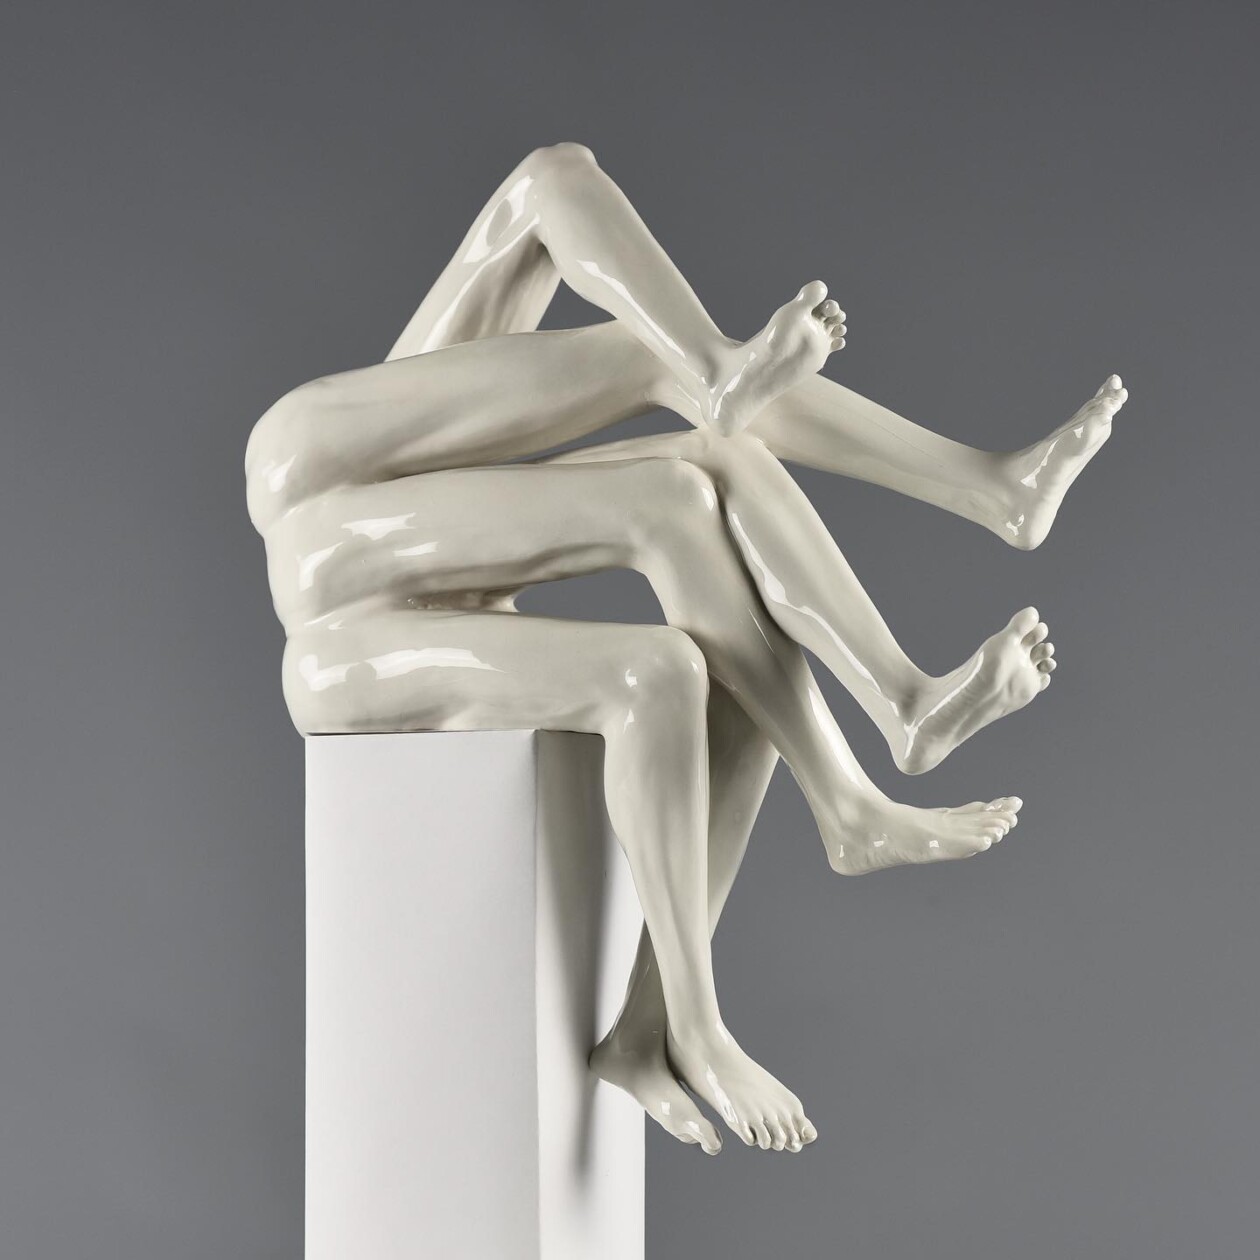 Bizarre Human Anatomy Based Sculptures By Alessandro Boezio (18)